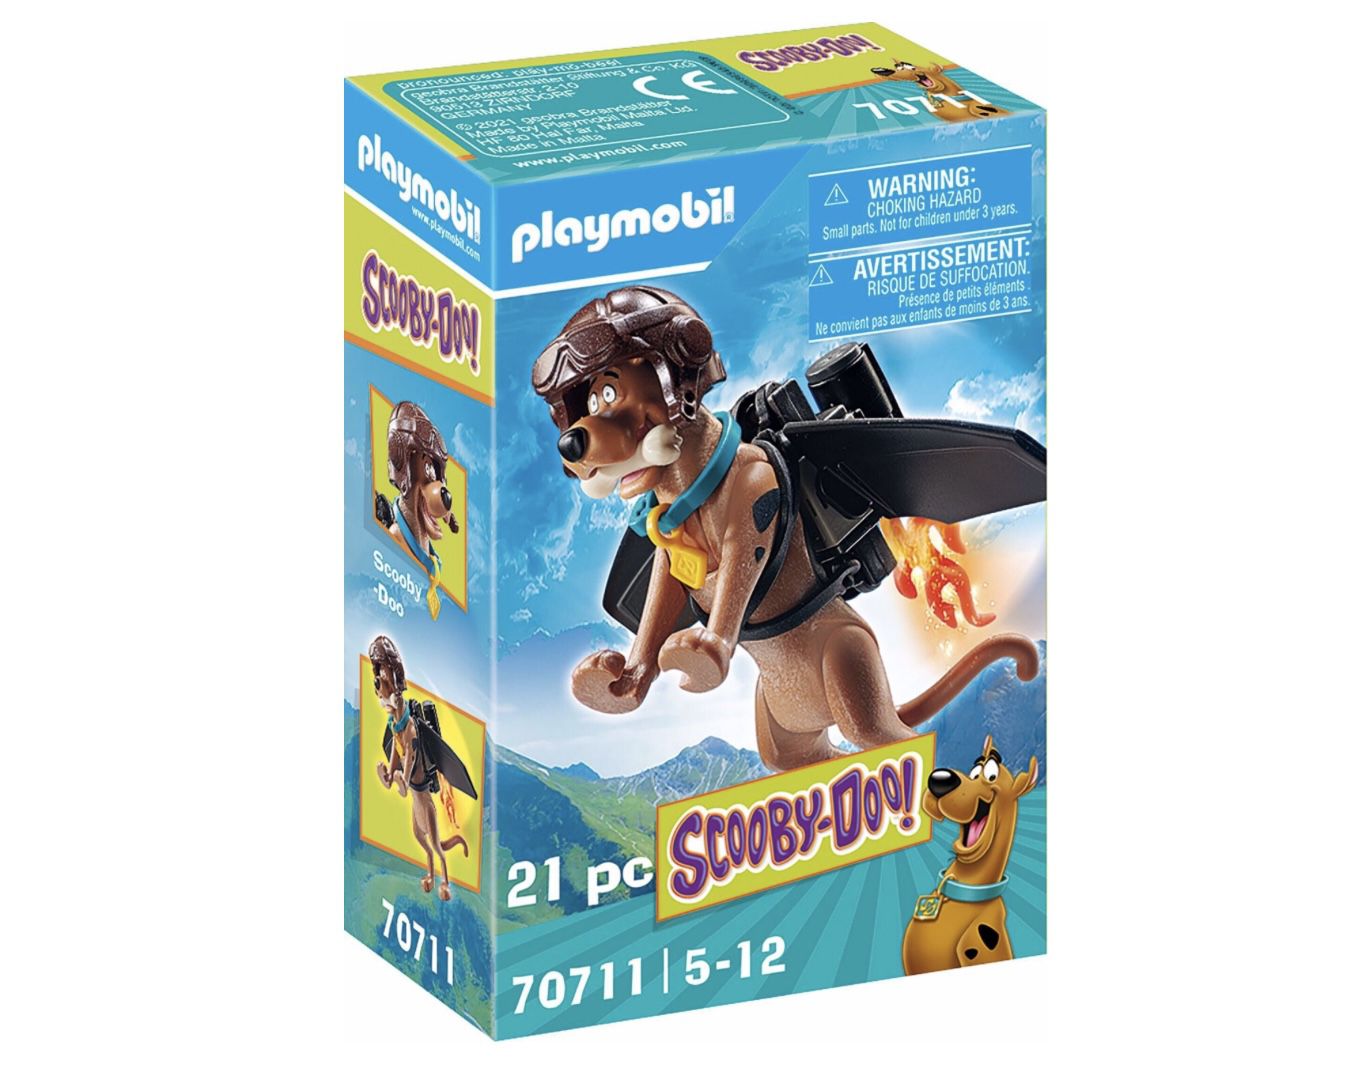 PLAYMOBIL 70711 Scooby-DOO! Sammelfigur Pilot für 3,29€ (statt 8€) &#8211; Prime